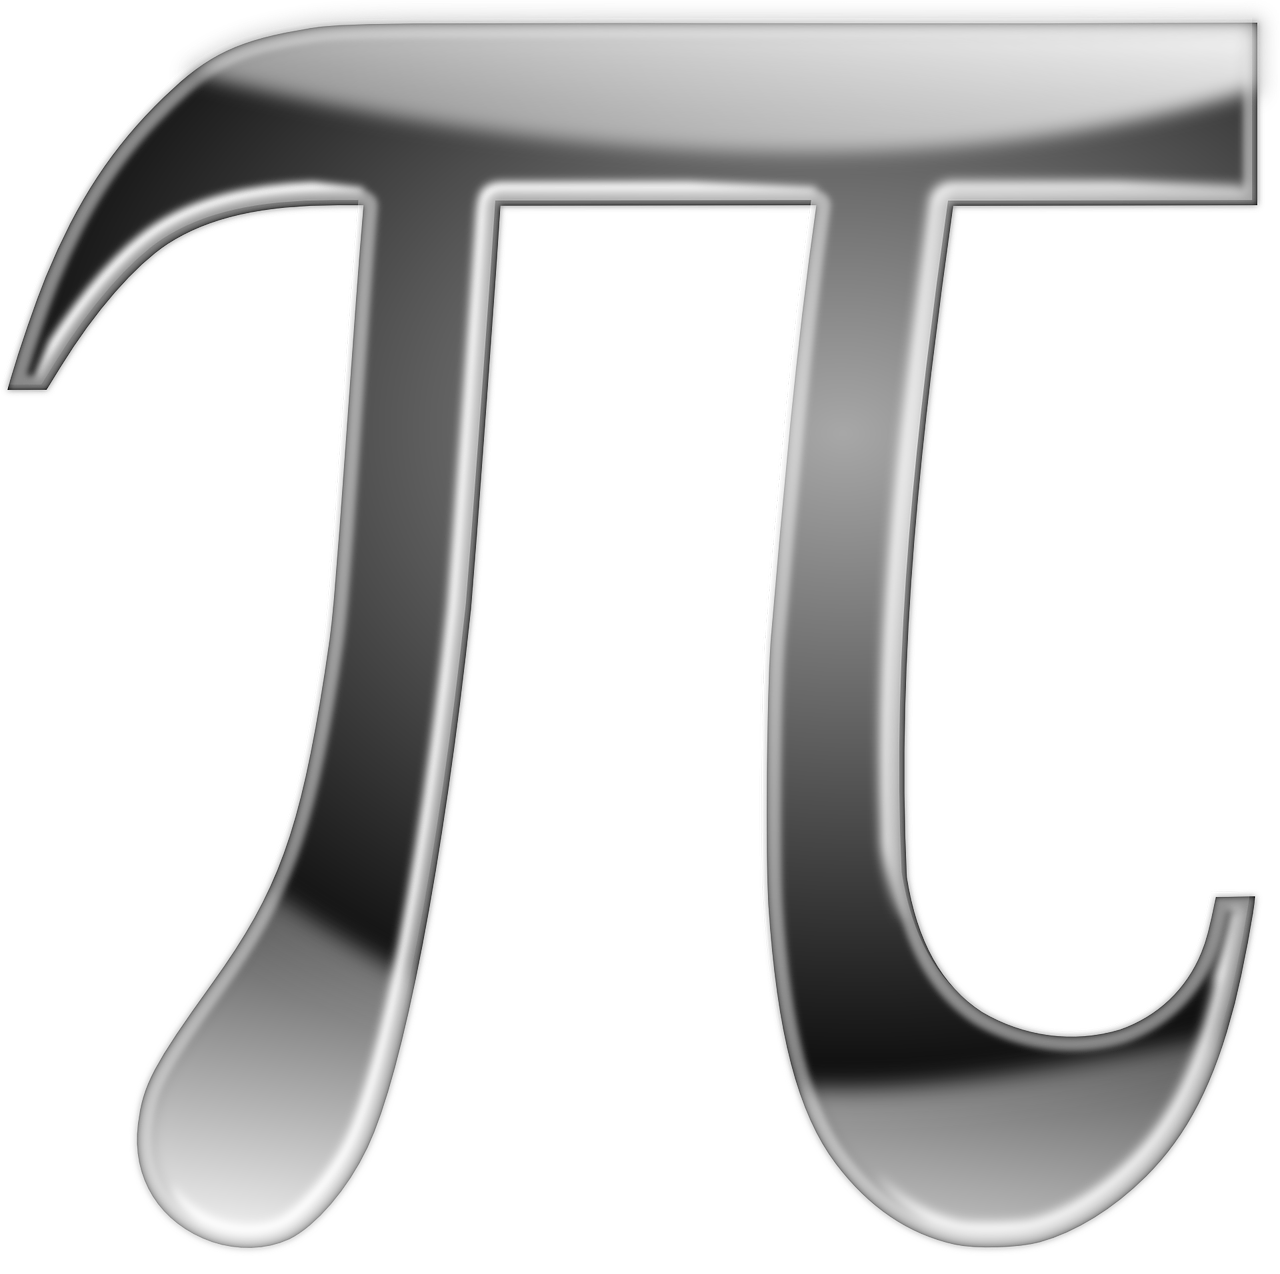 http://pixabay.com/de/pi-mathematik-konstant-gl%C3%A4nzend-151602/